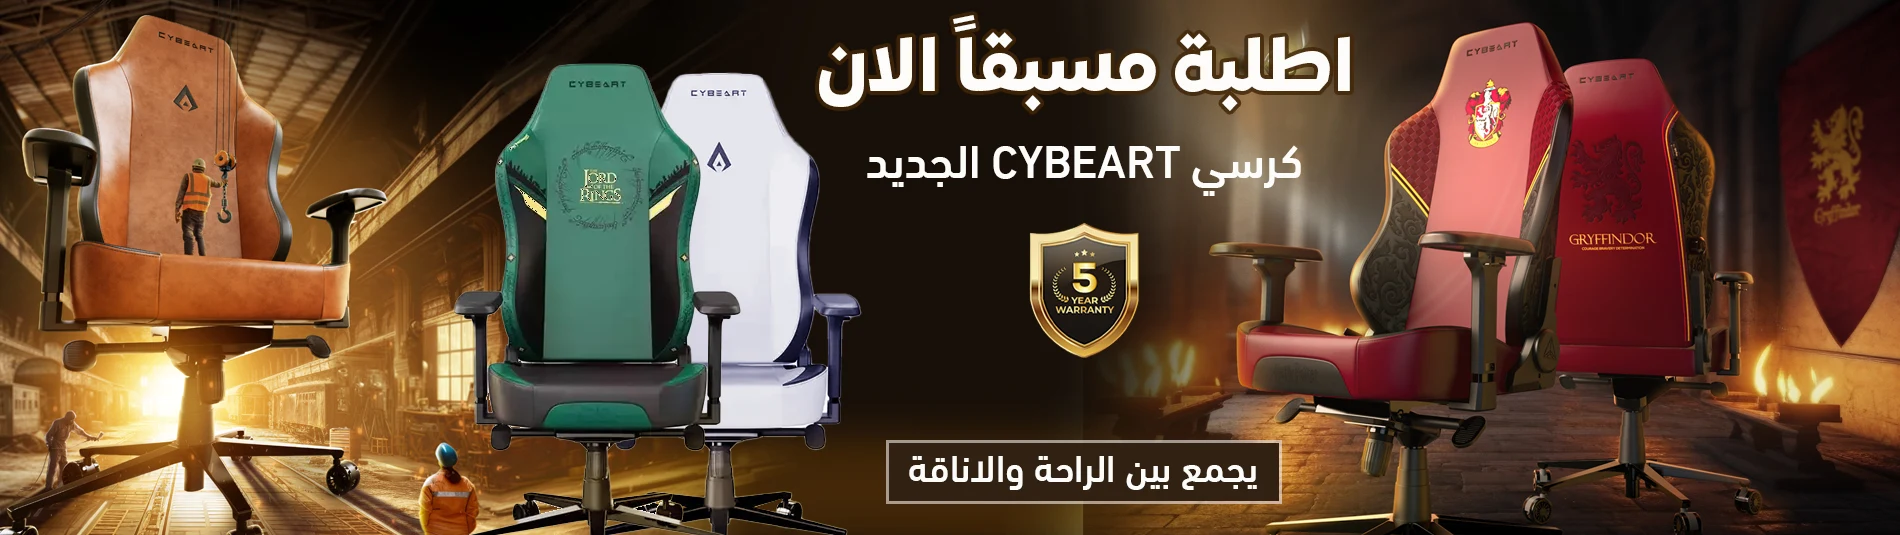 Cyberart_Chair-1900x500